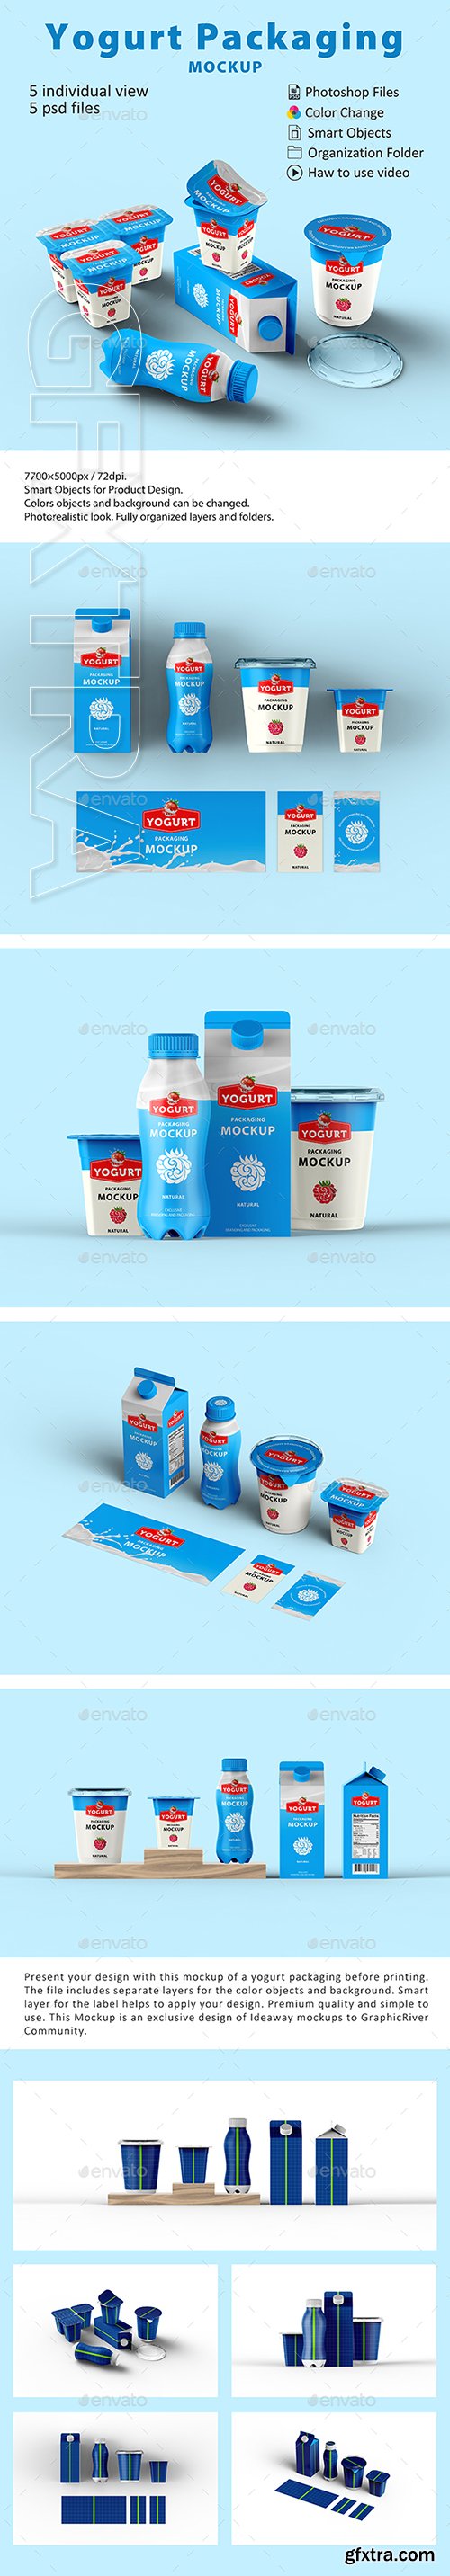 GraphicRiver - Yogurt Packaging Mockup 22658614